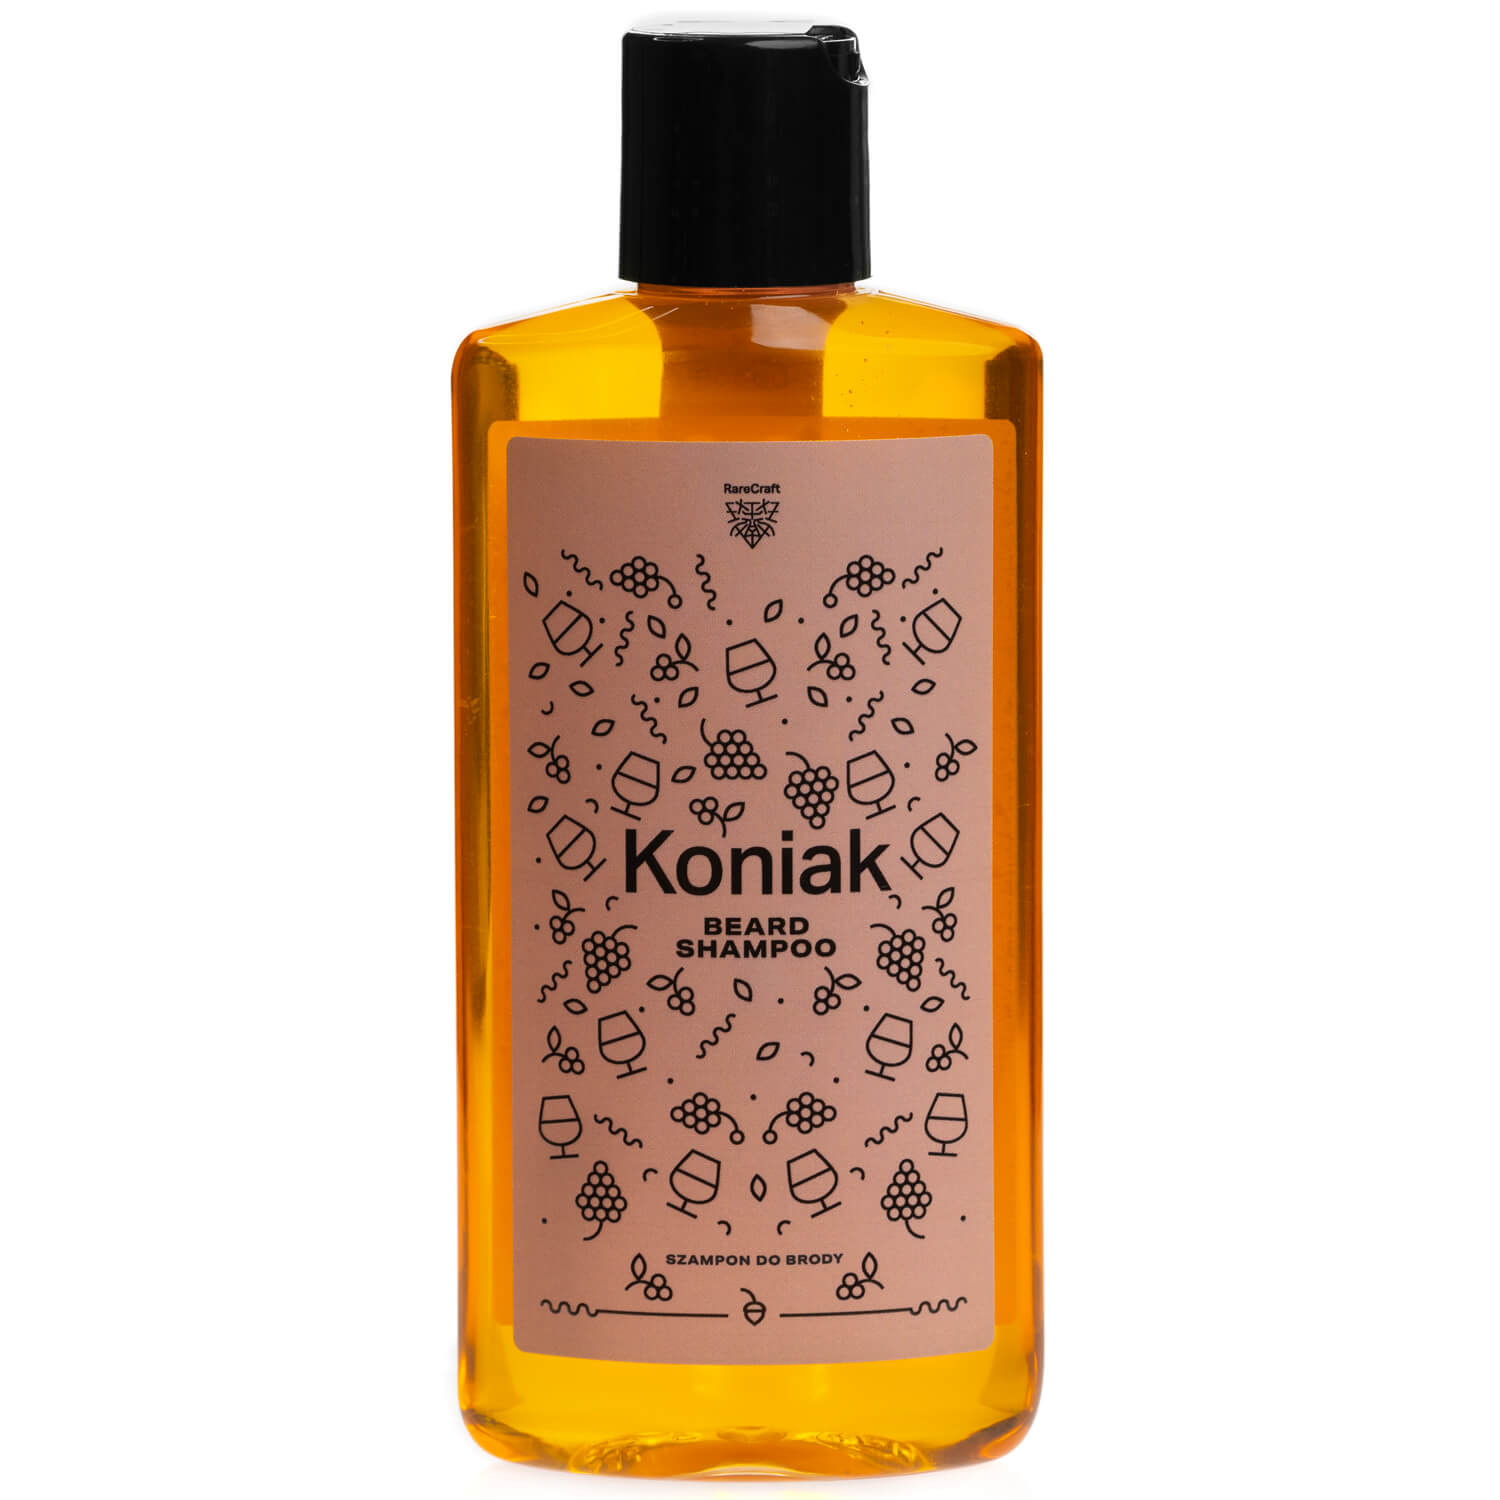 RareCraft Koniak, Beard Shampoo